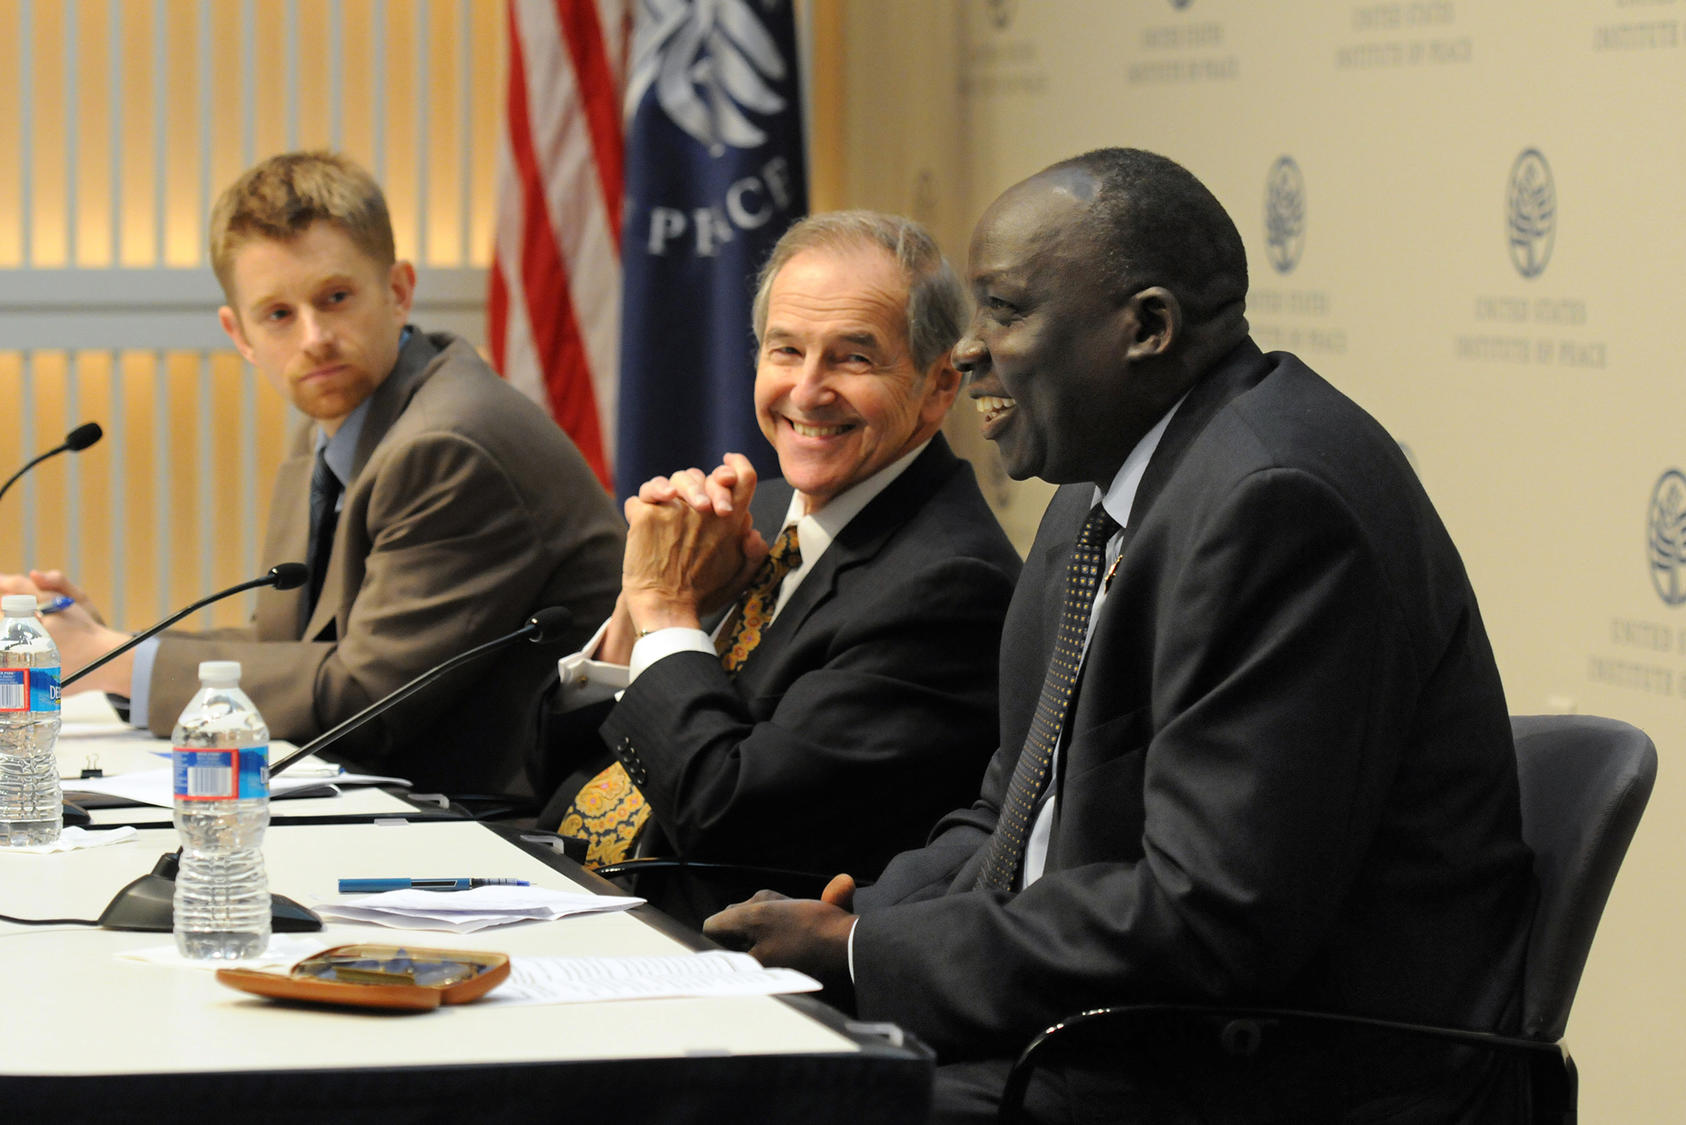 Ambassador Lyman at USIP event on South Sudan, July 9, 2012.